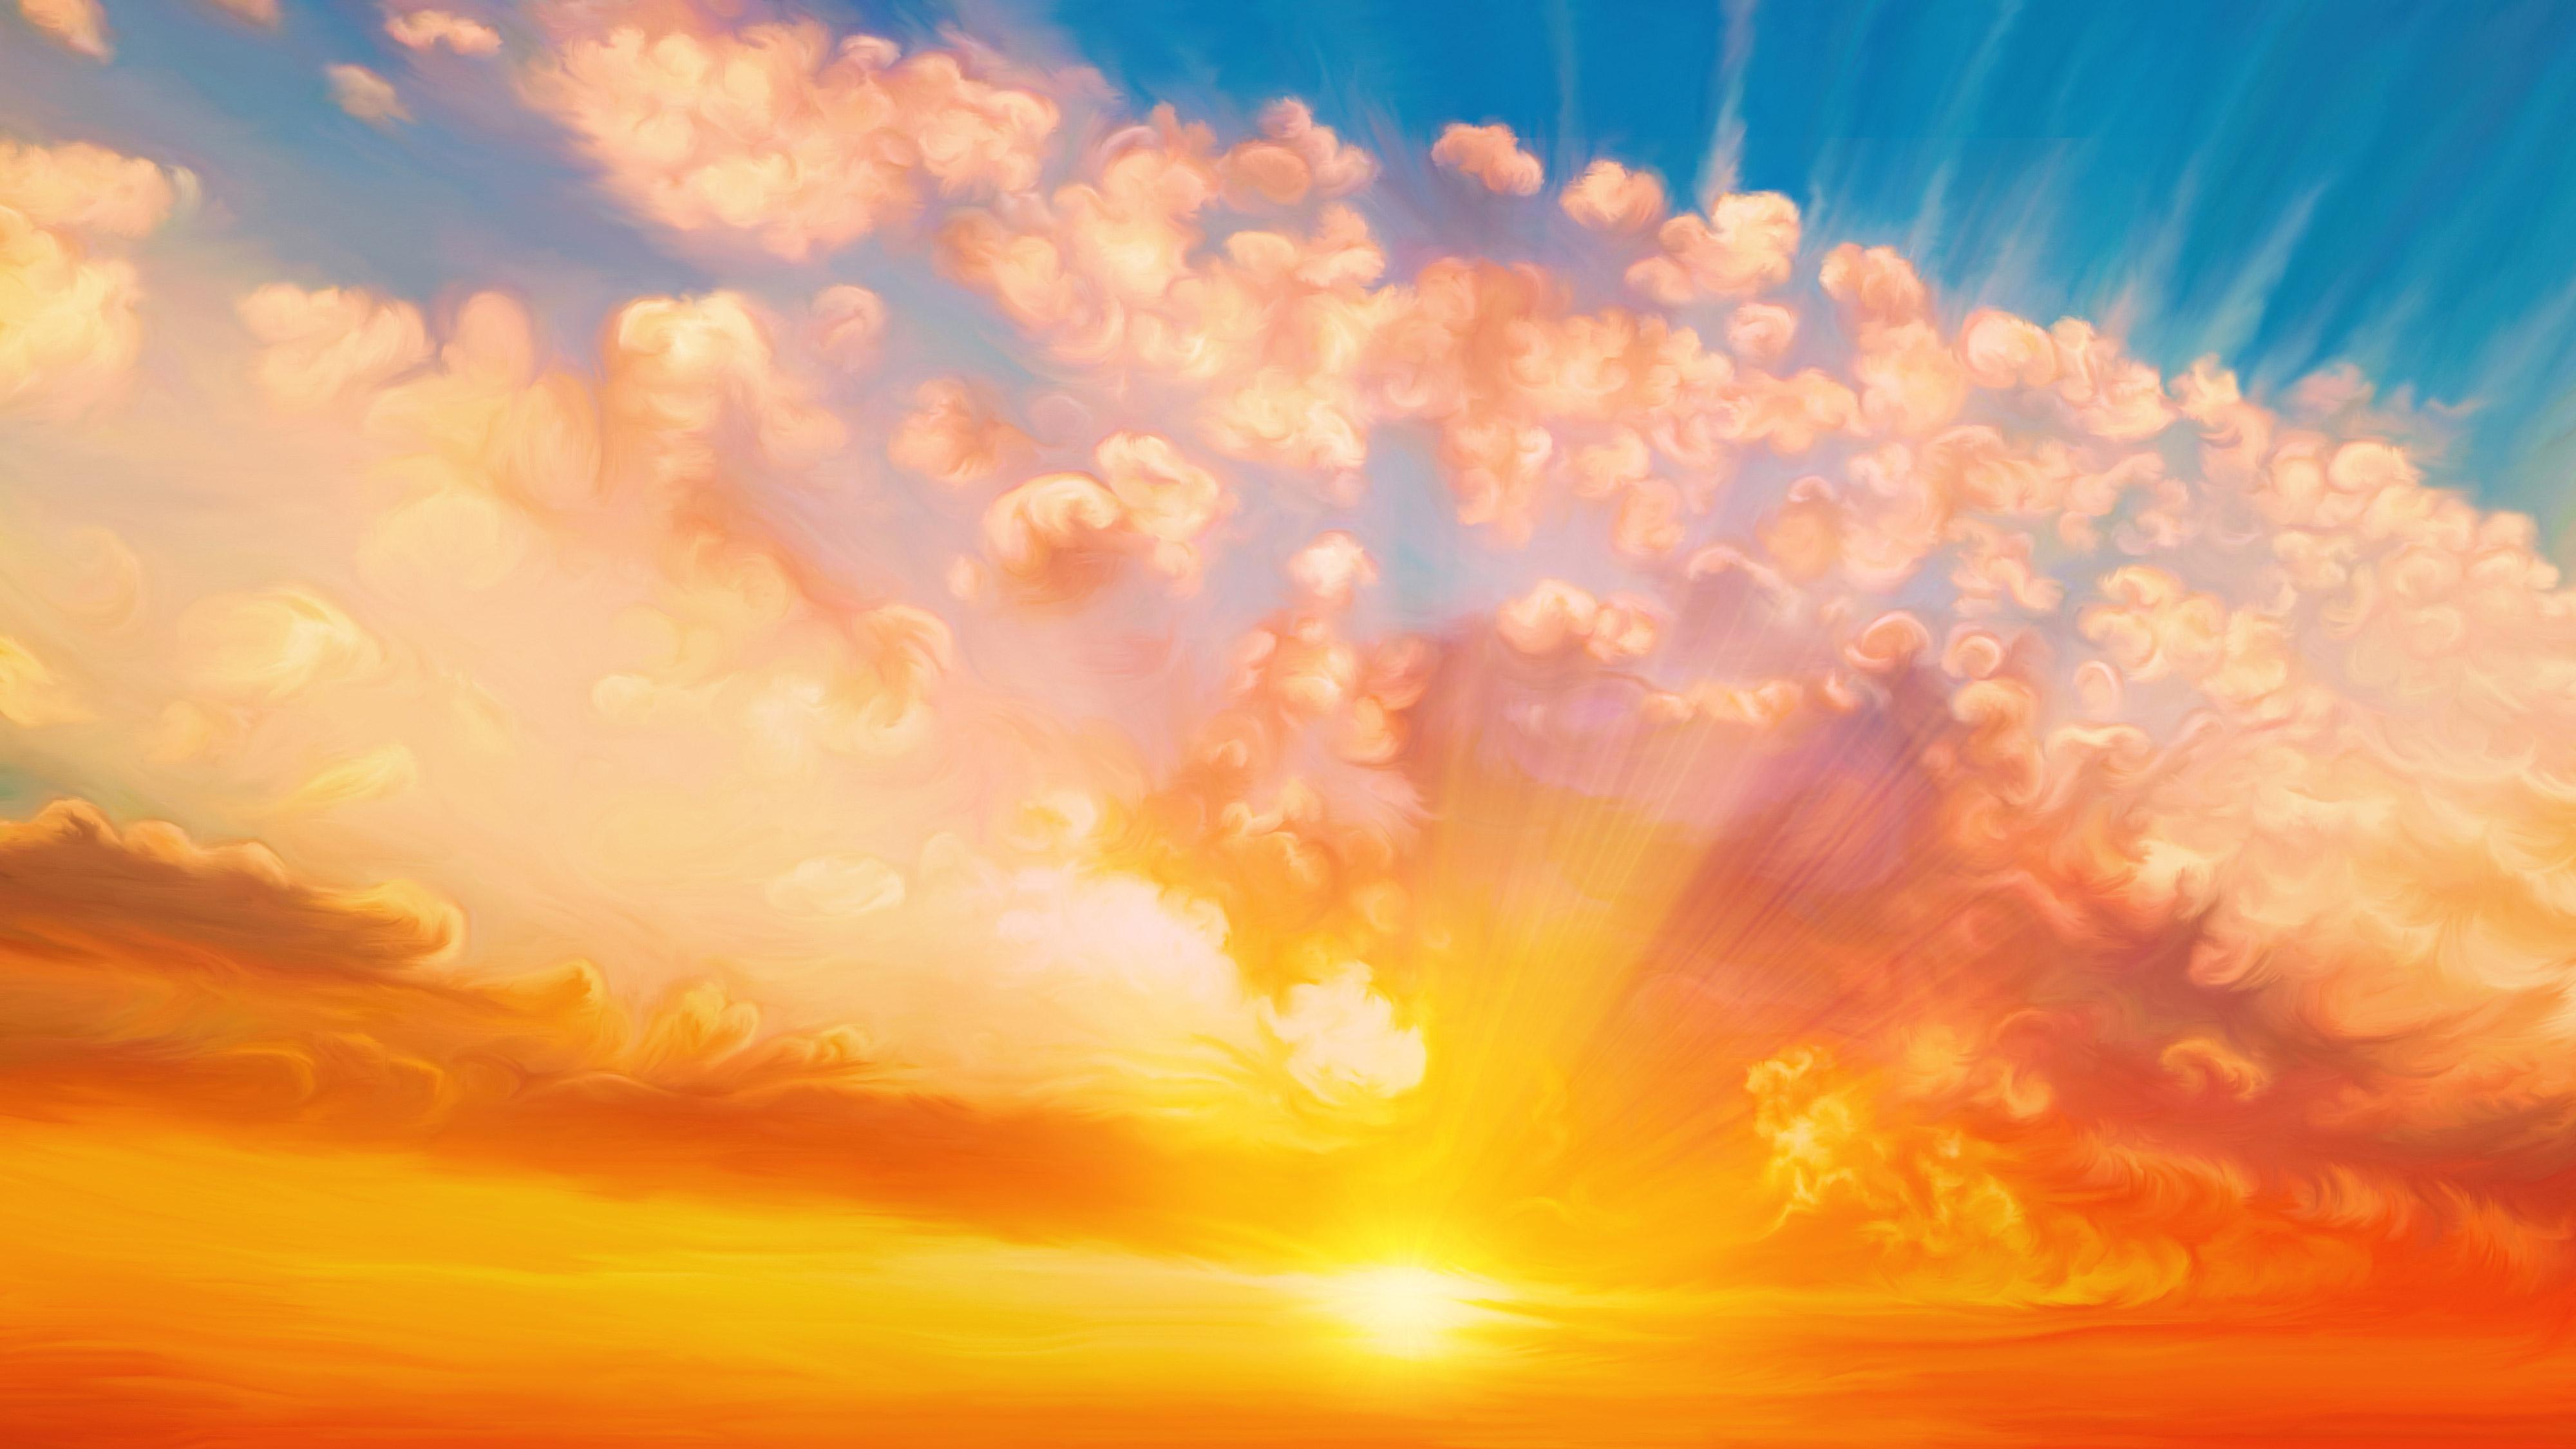 Sunset Sky Painting, HD Artist, 4k Wallpaper, Image